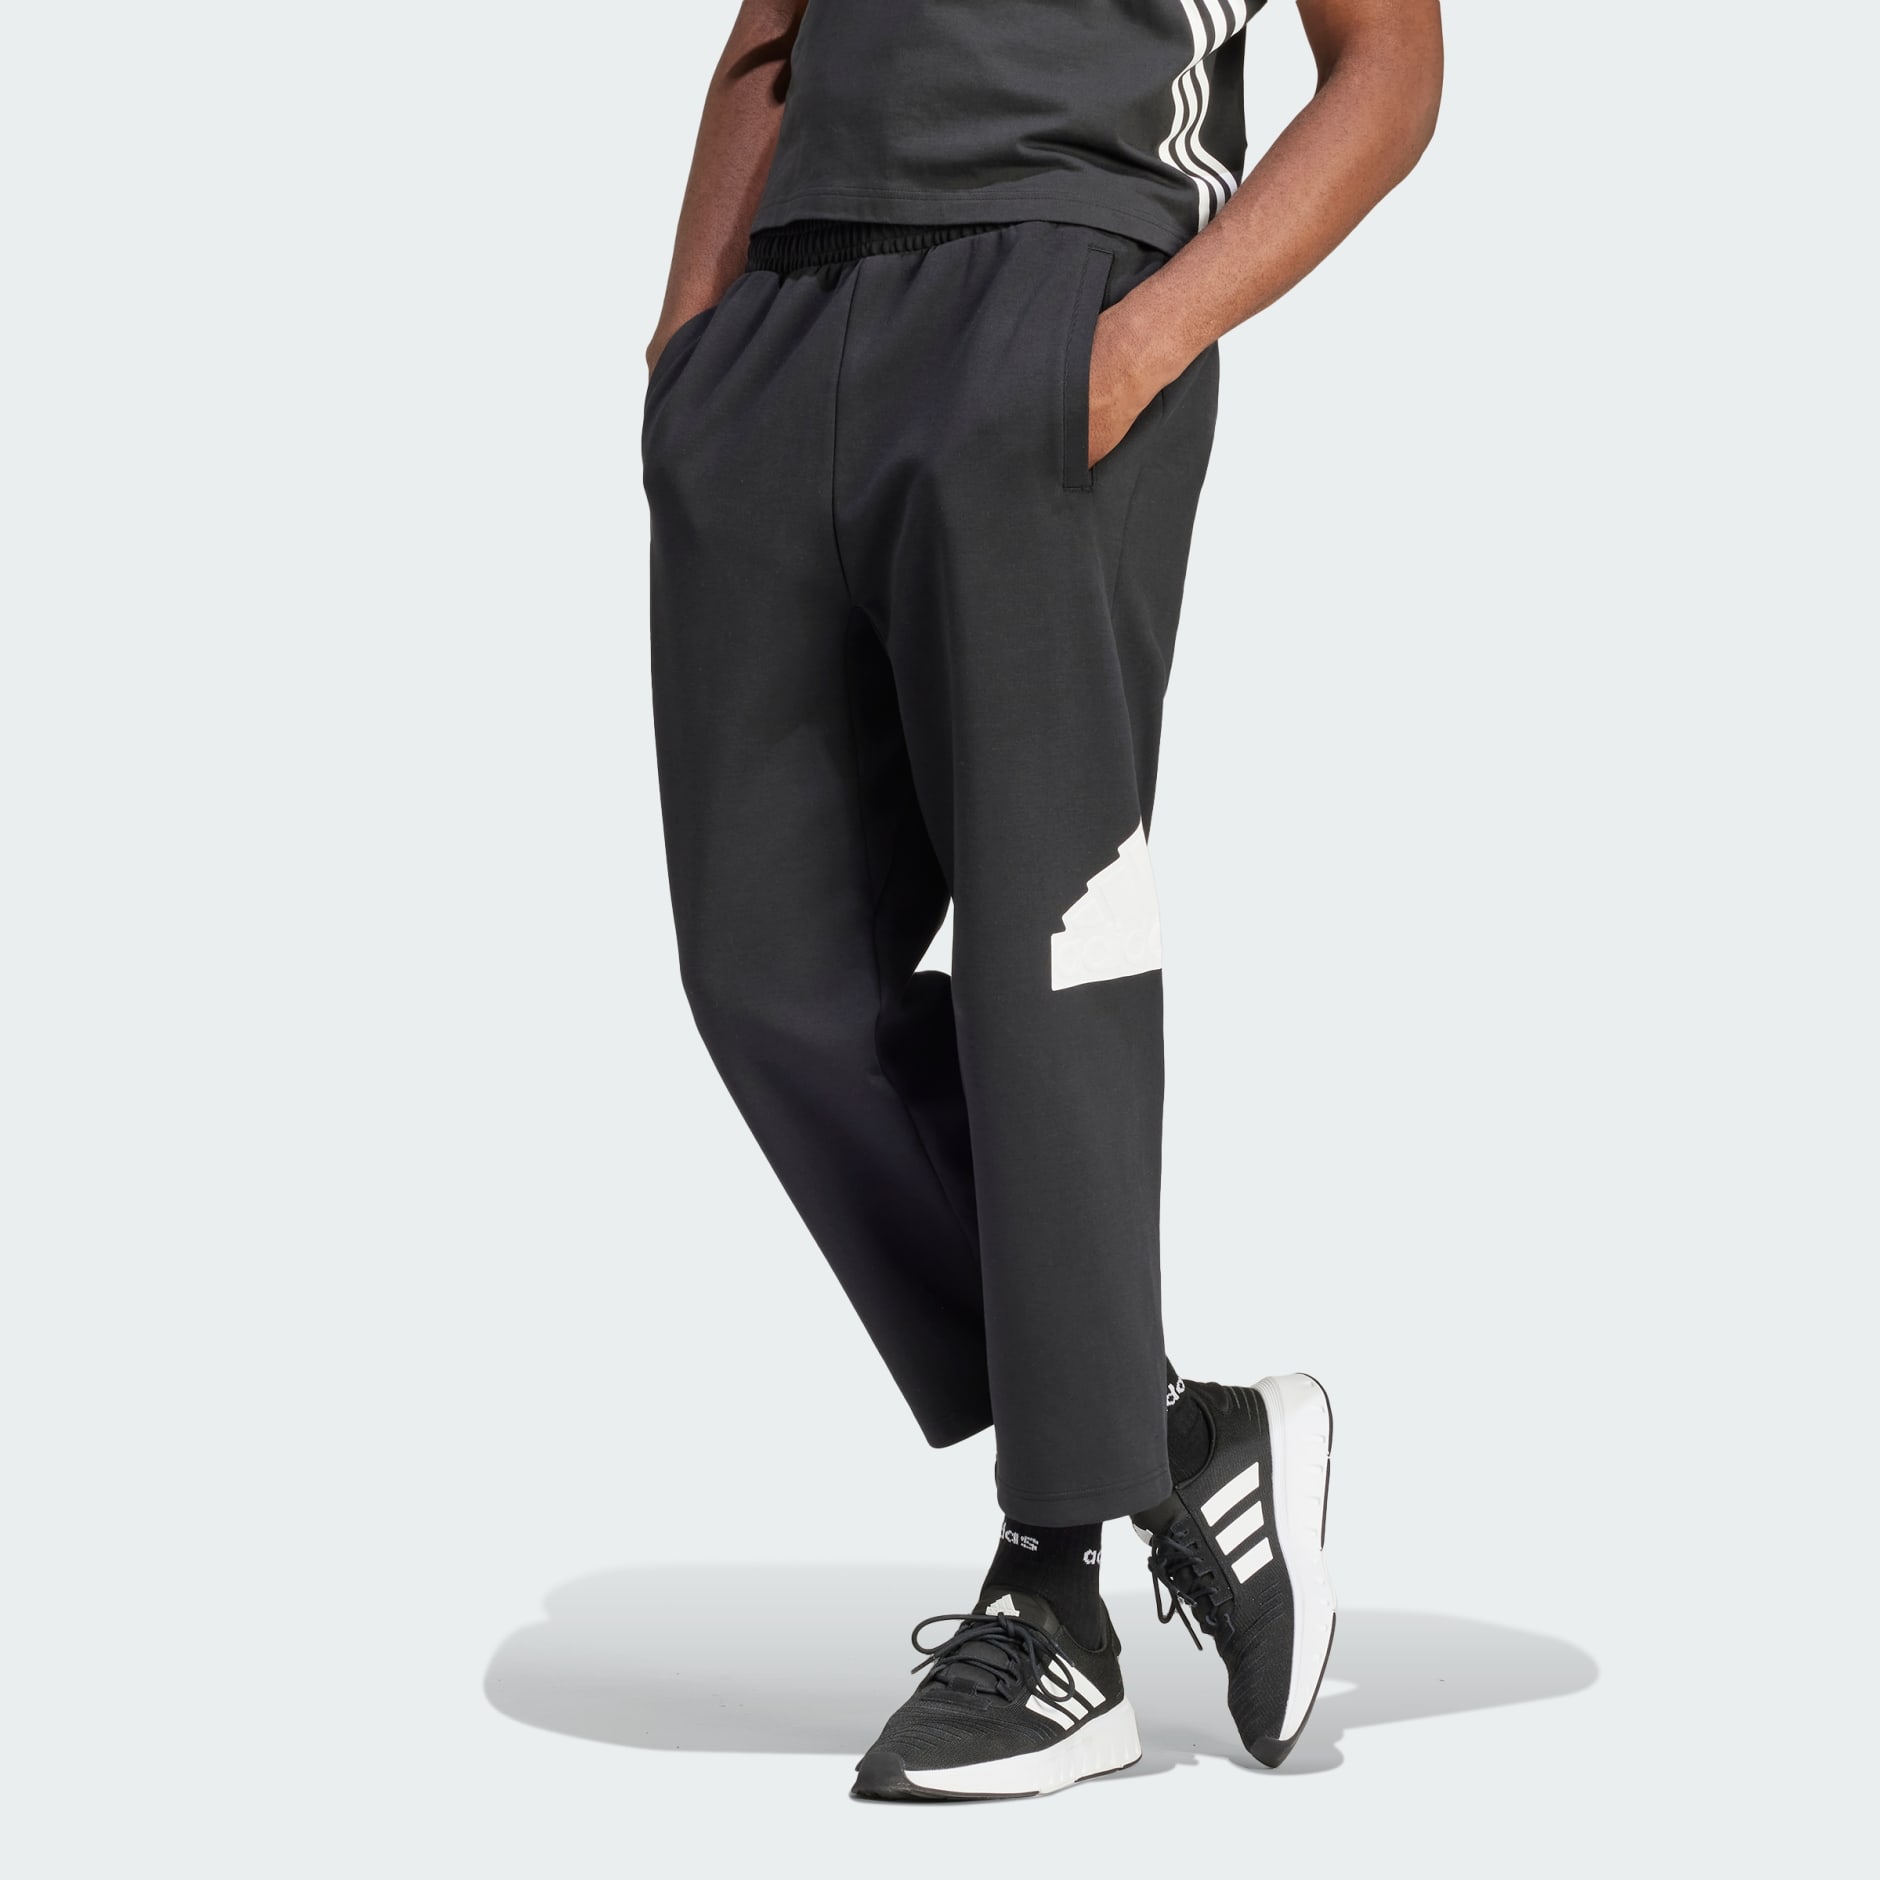  adidas Women's Athletics 3 Stripe 7/8 Pants, Black